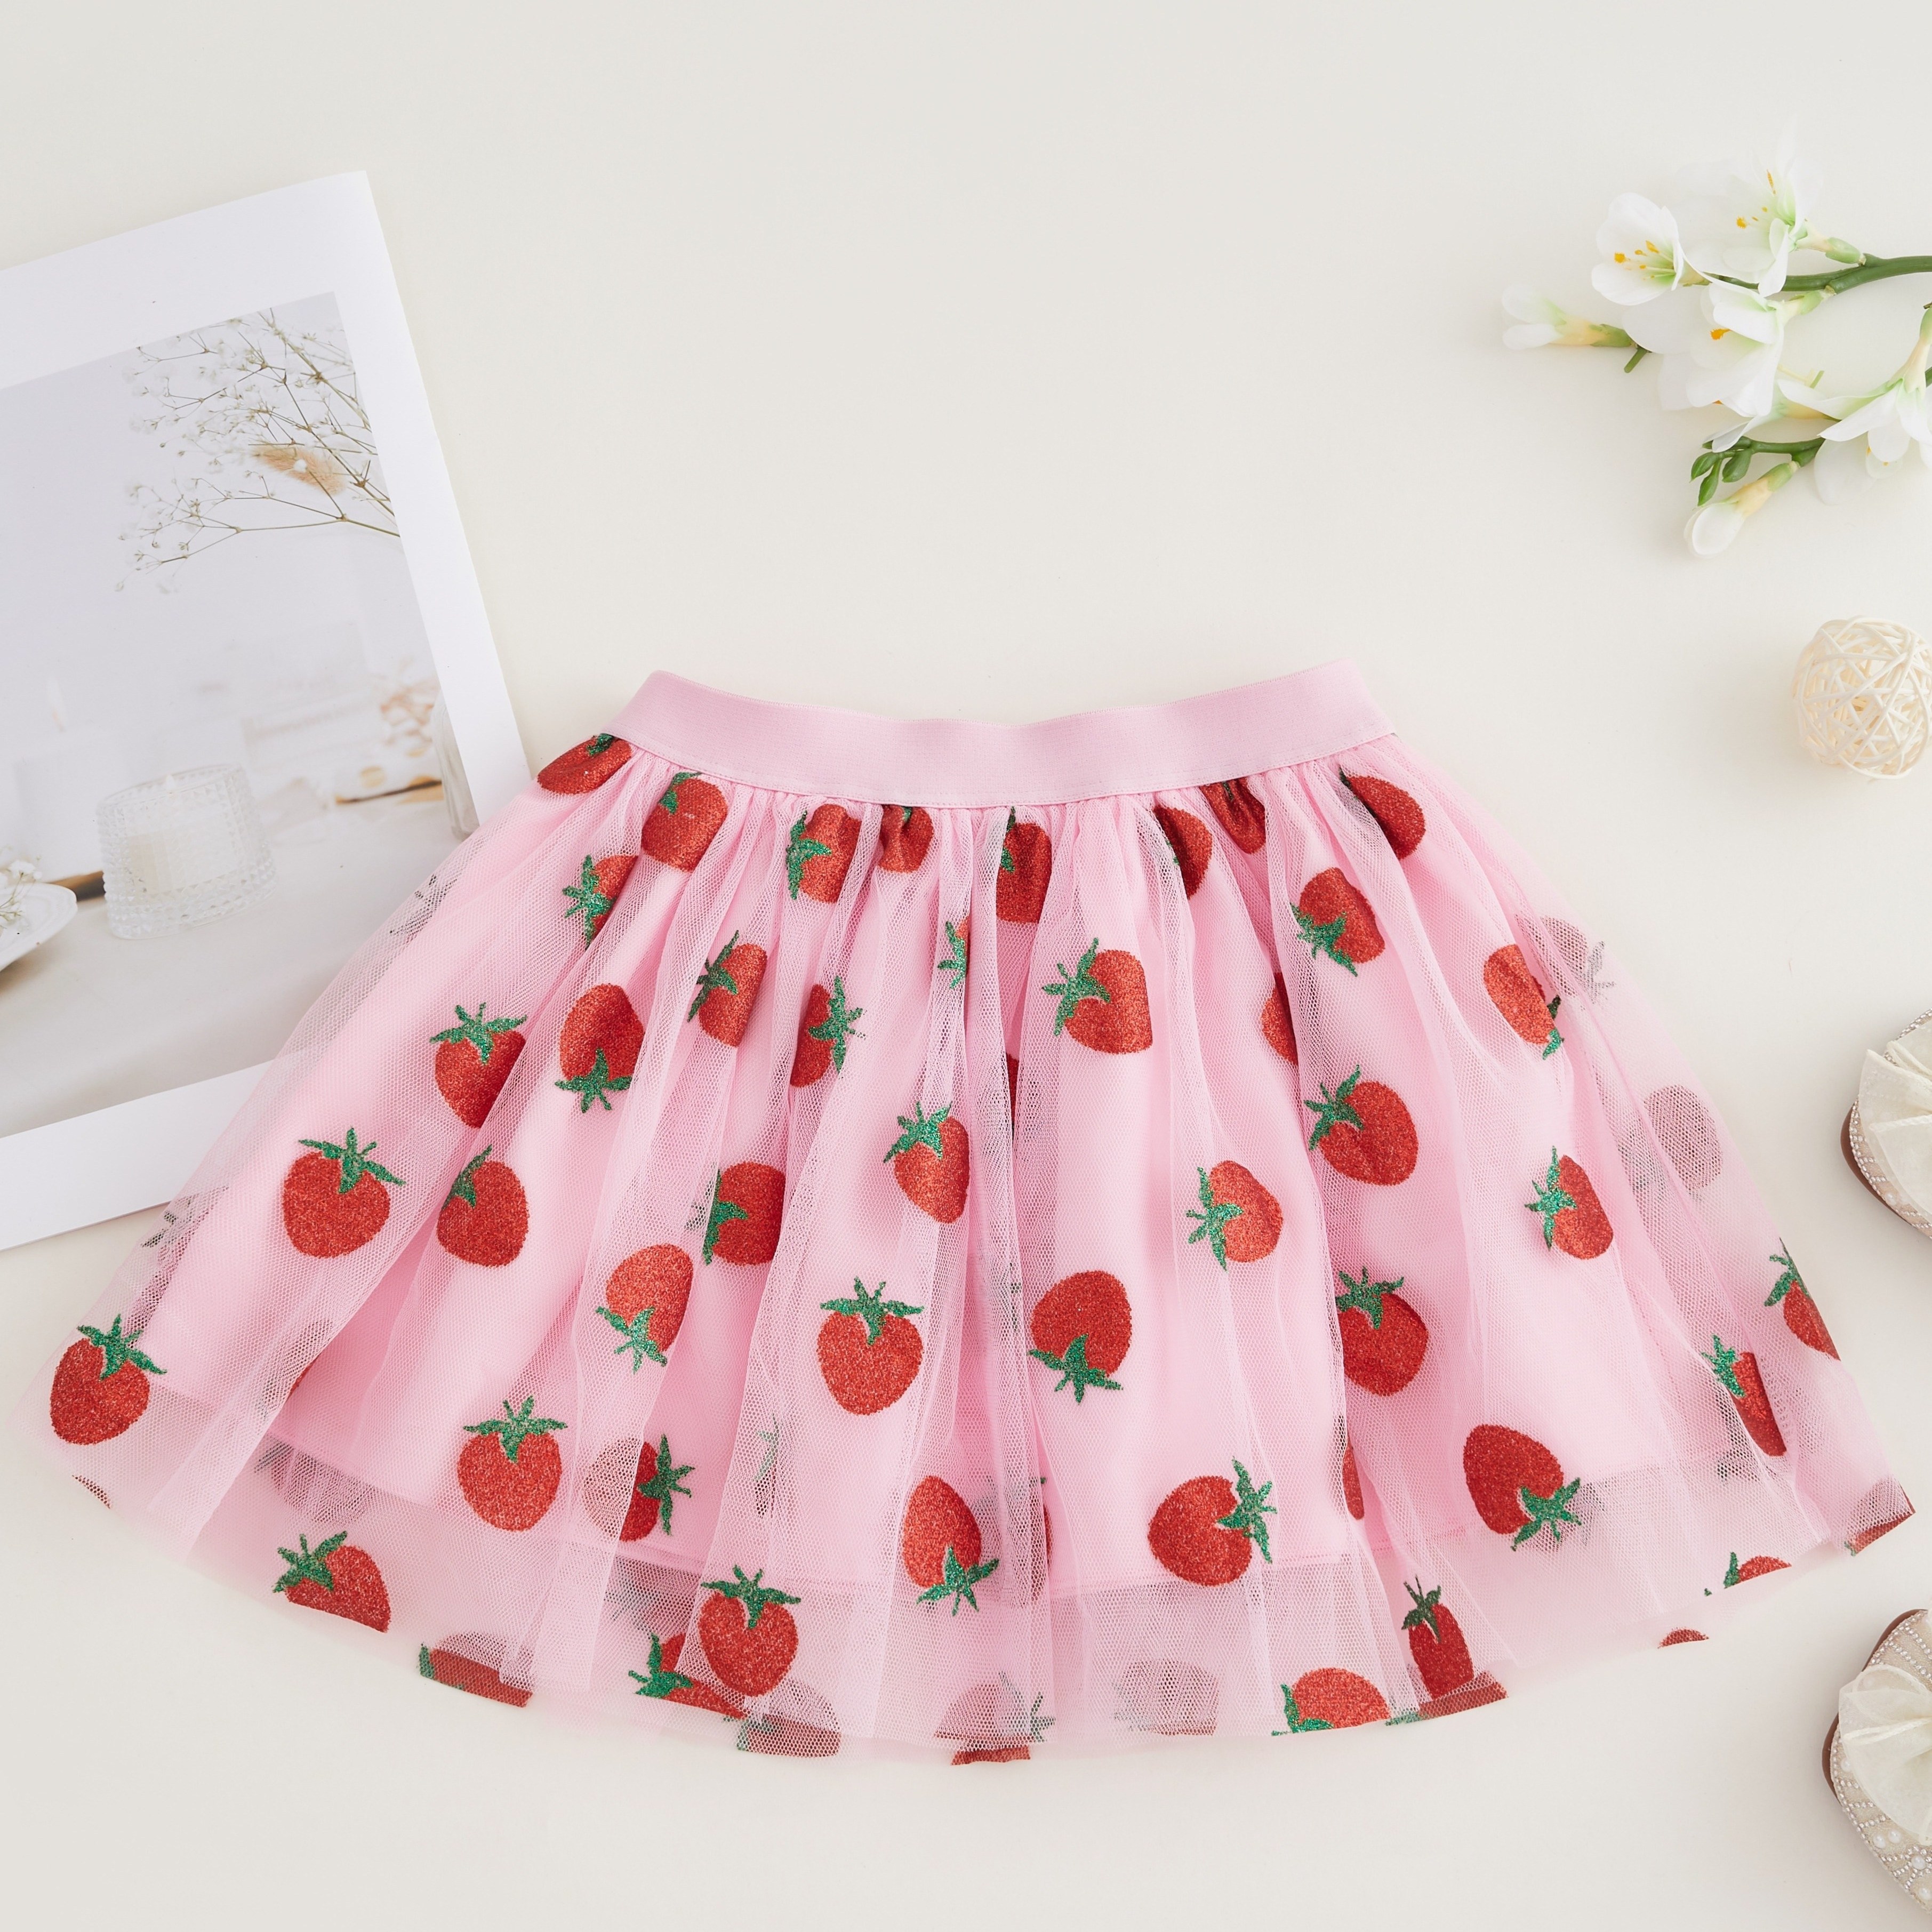 

Girls' Pink Tulle Tutu Skirt With Strawberry Embellishments, Cute Puffy Princess Birthday Skirt, Breathable Mesh Fabric, Elastic Waistband